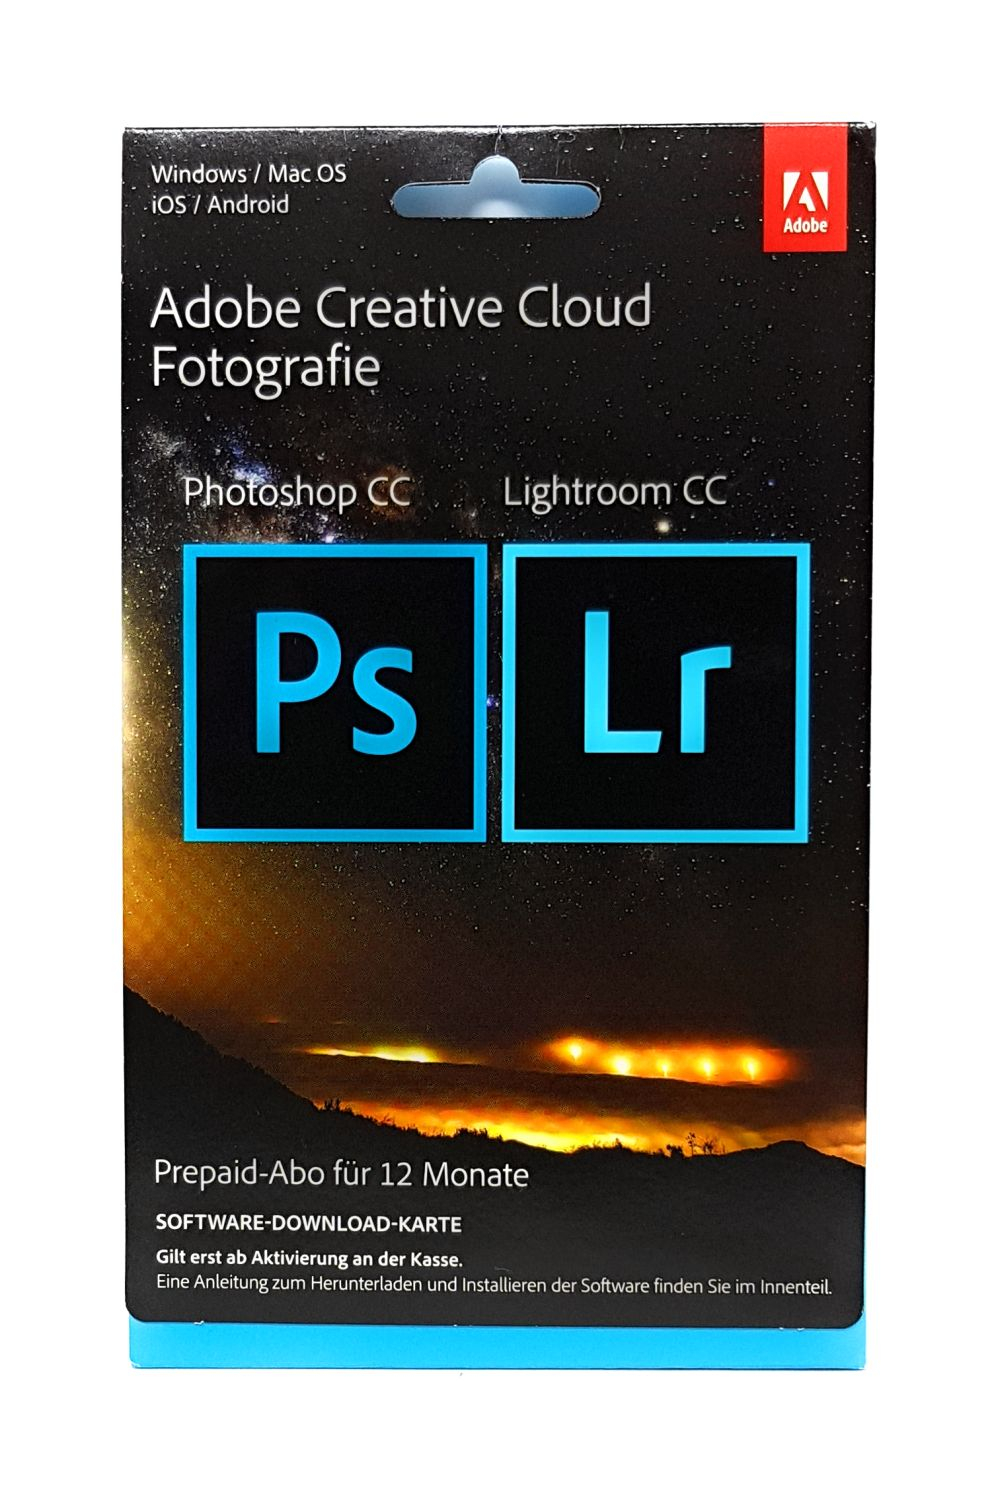 Adobe Creative Cloud Foto Photoshop Lightroom Cc 20gb 1 Jahr